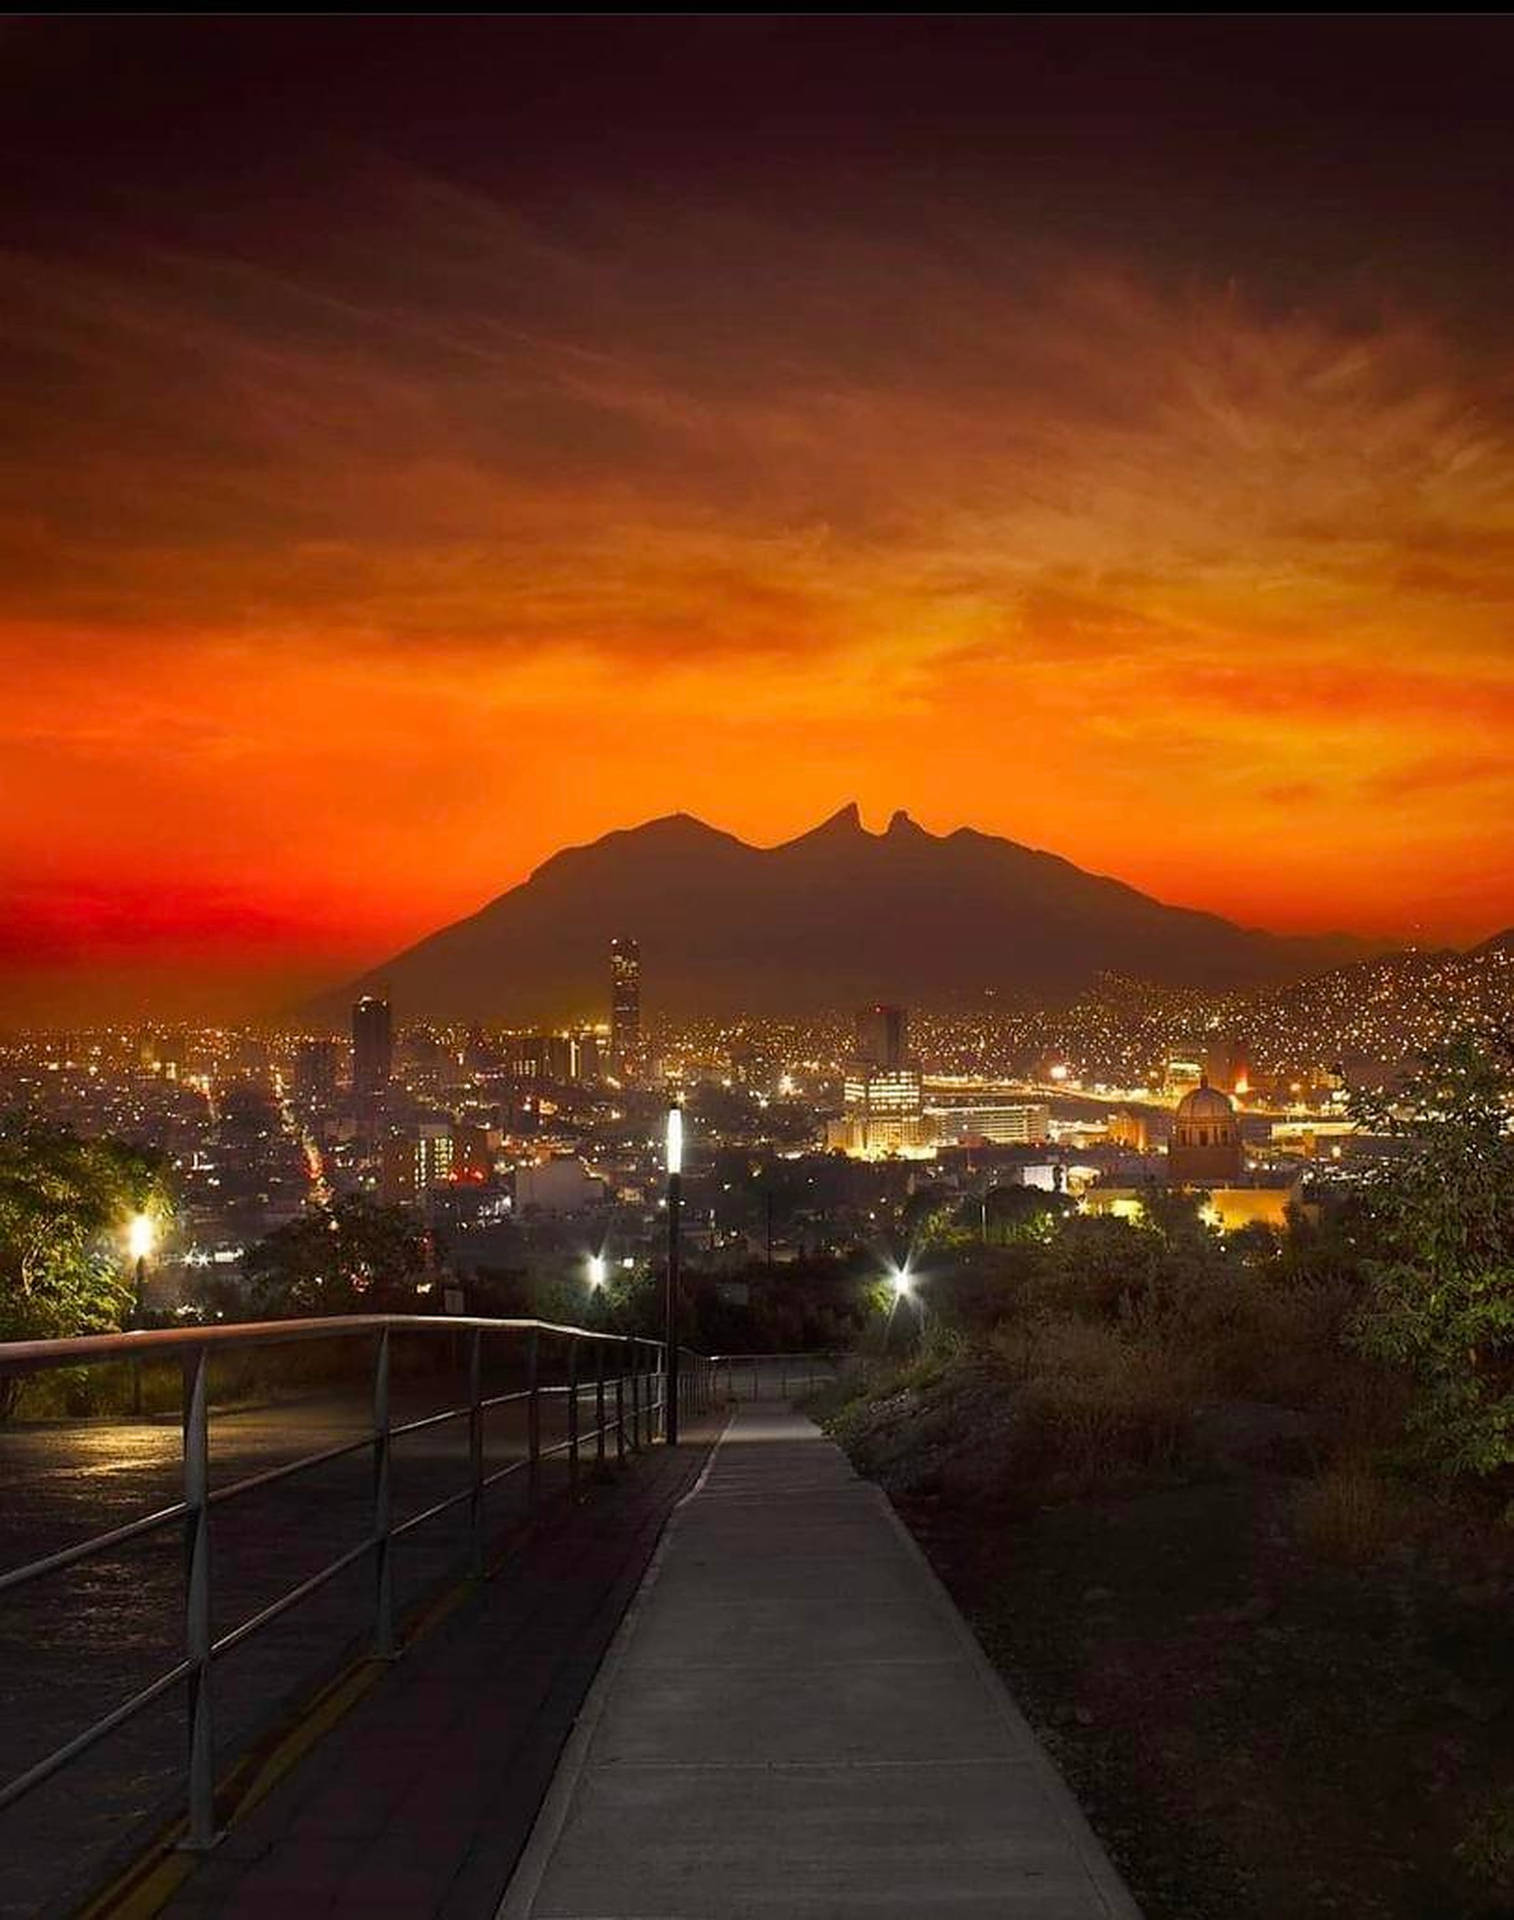 Monterreycerro De La Silla Mountain Would Be Translated To 